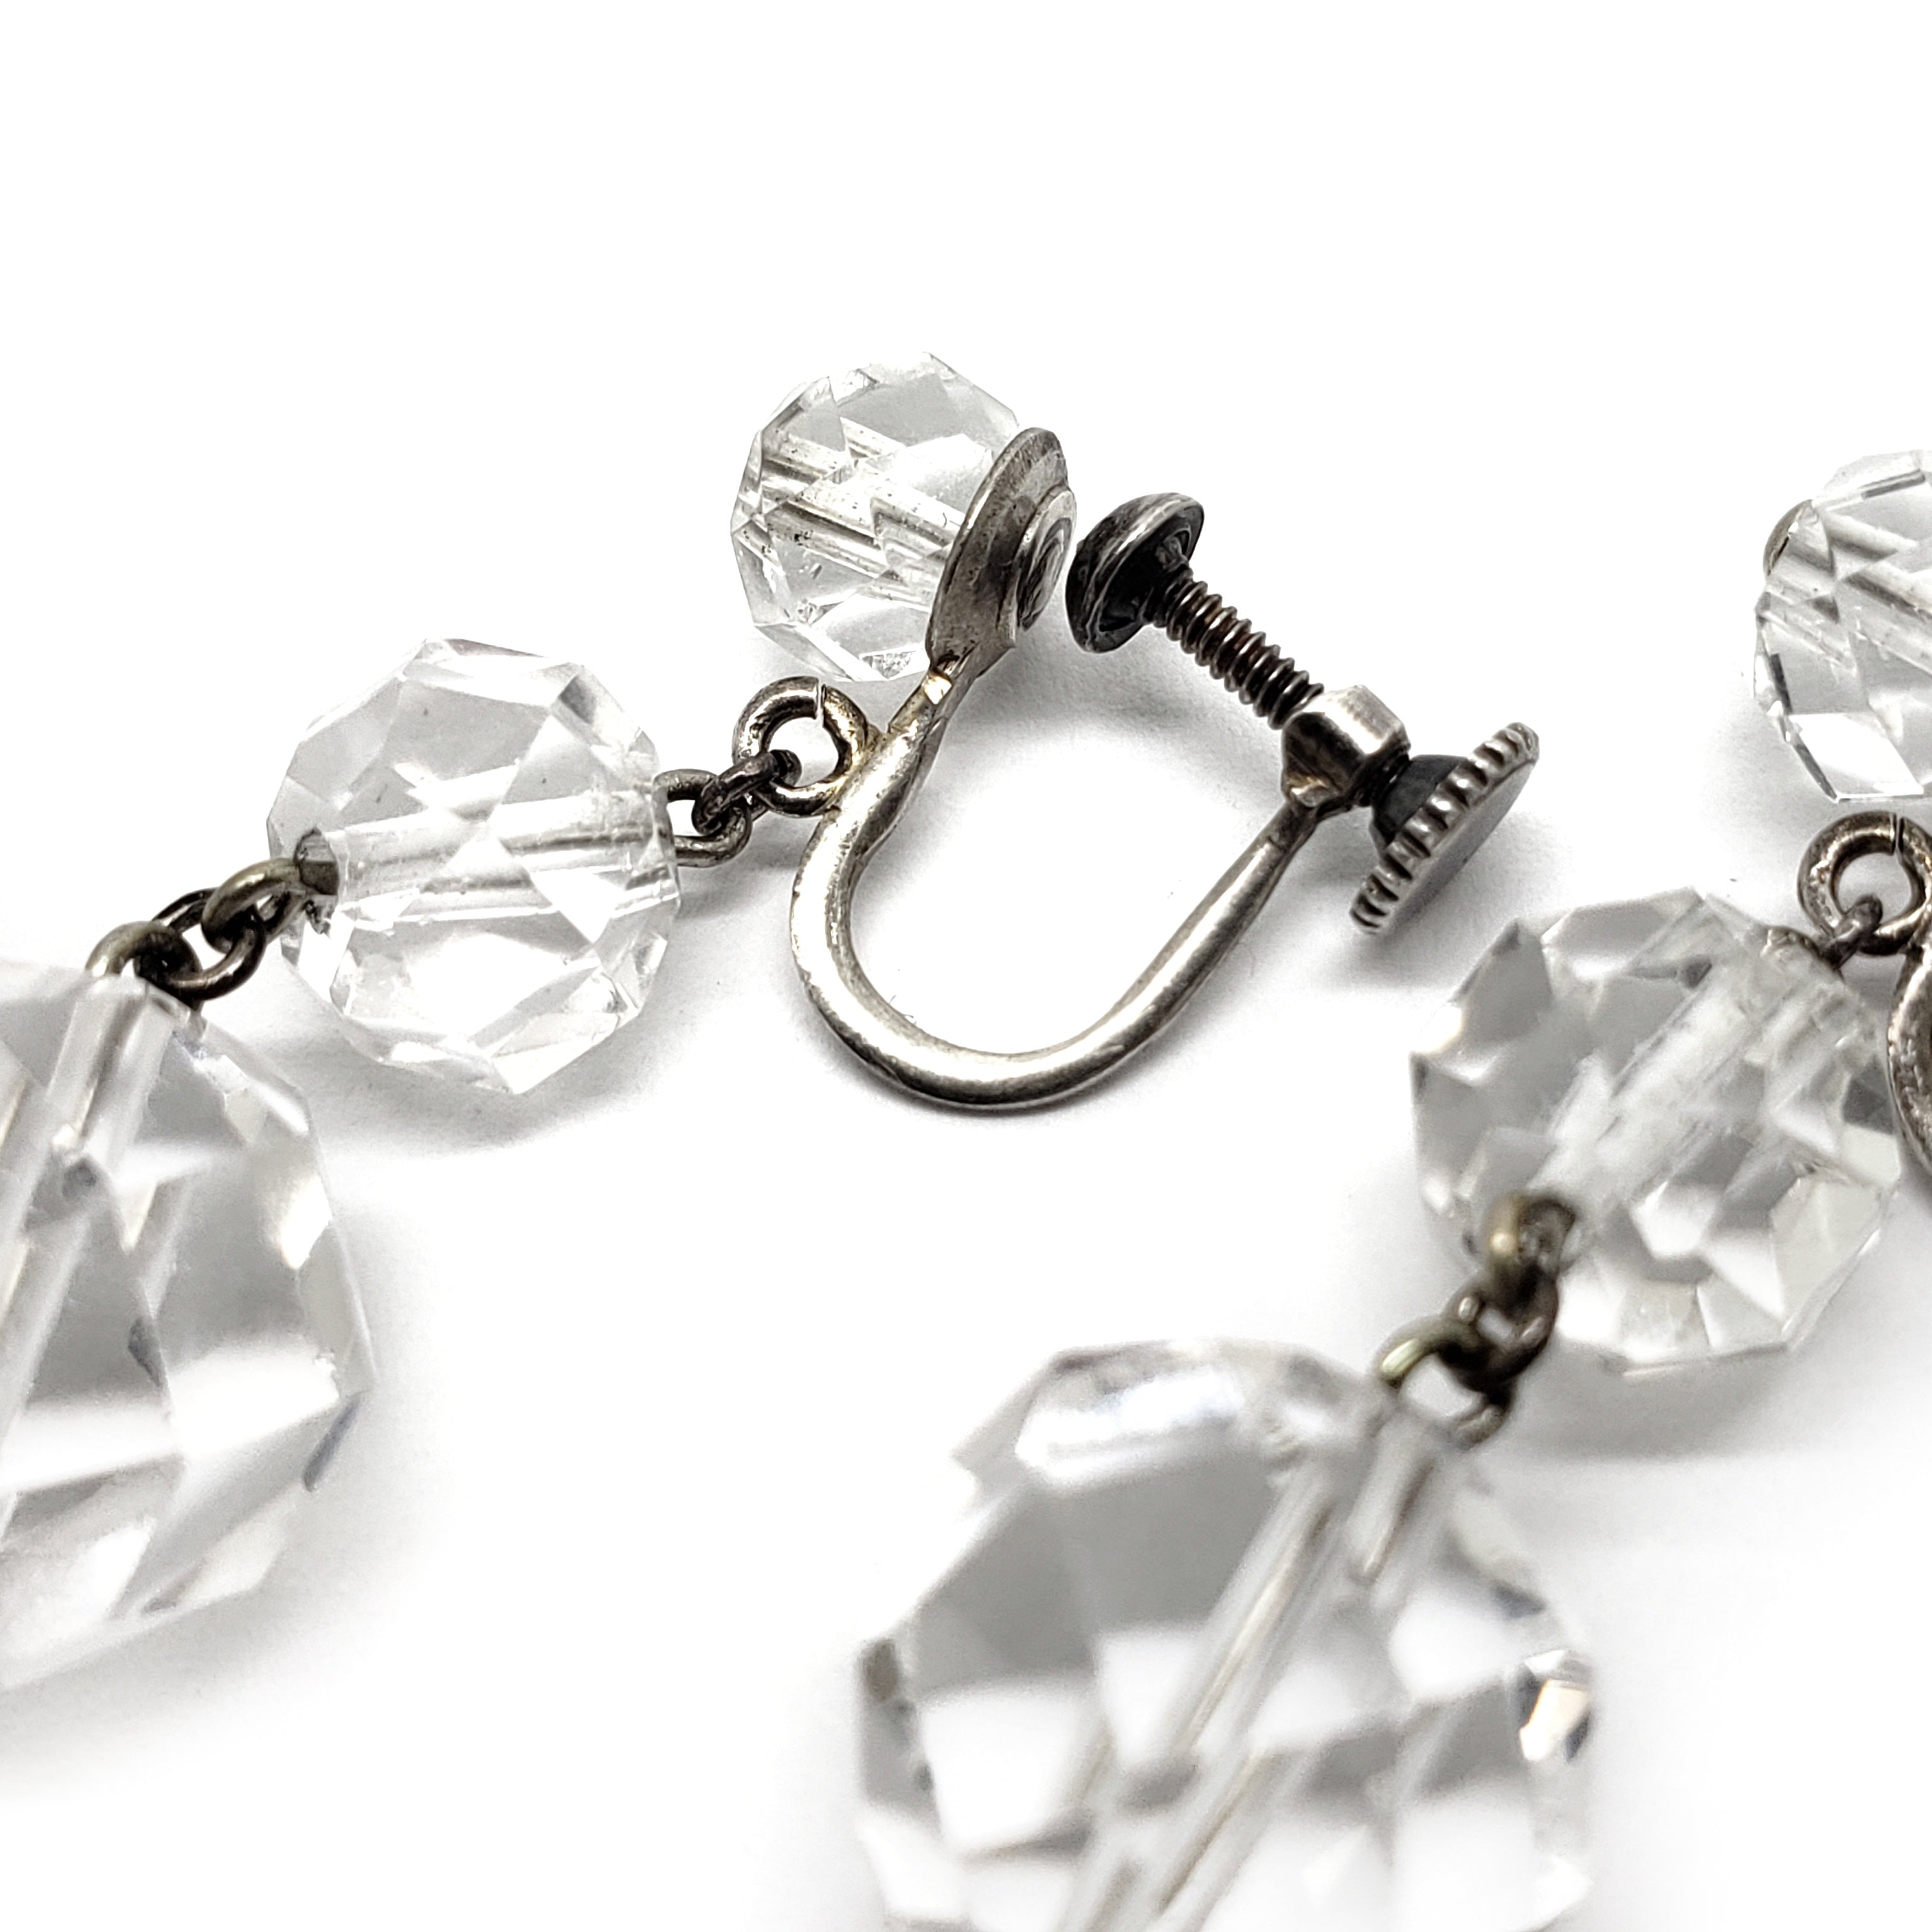 Quartz Crystal Earrings | Era Design Vancouver Canada